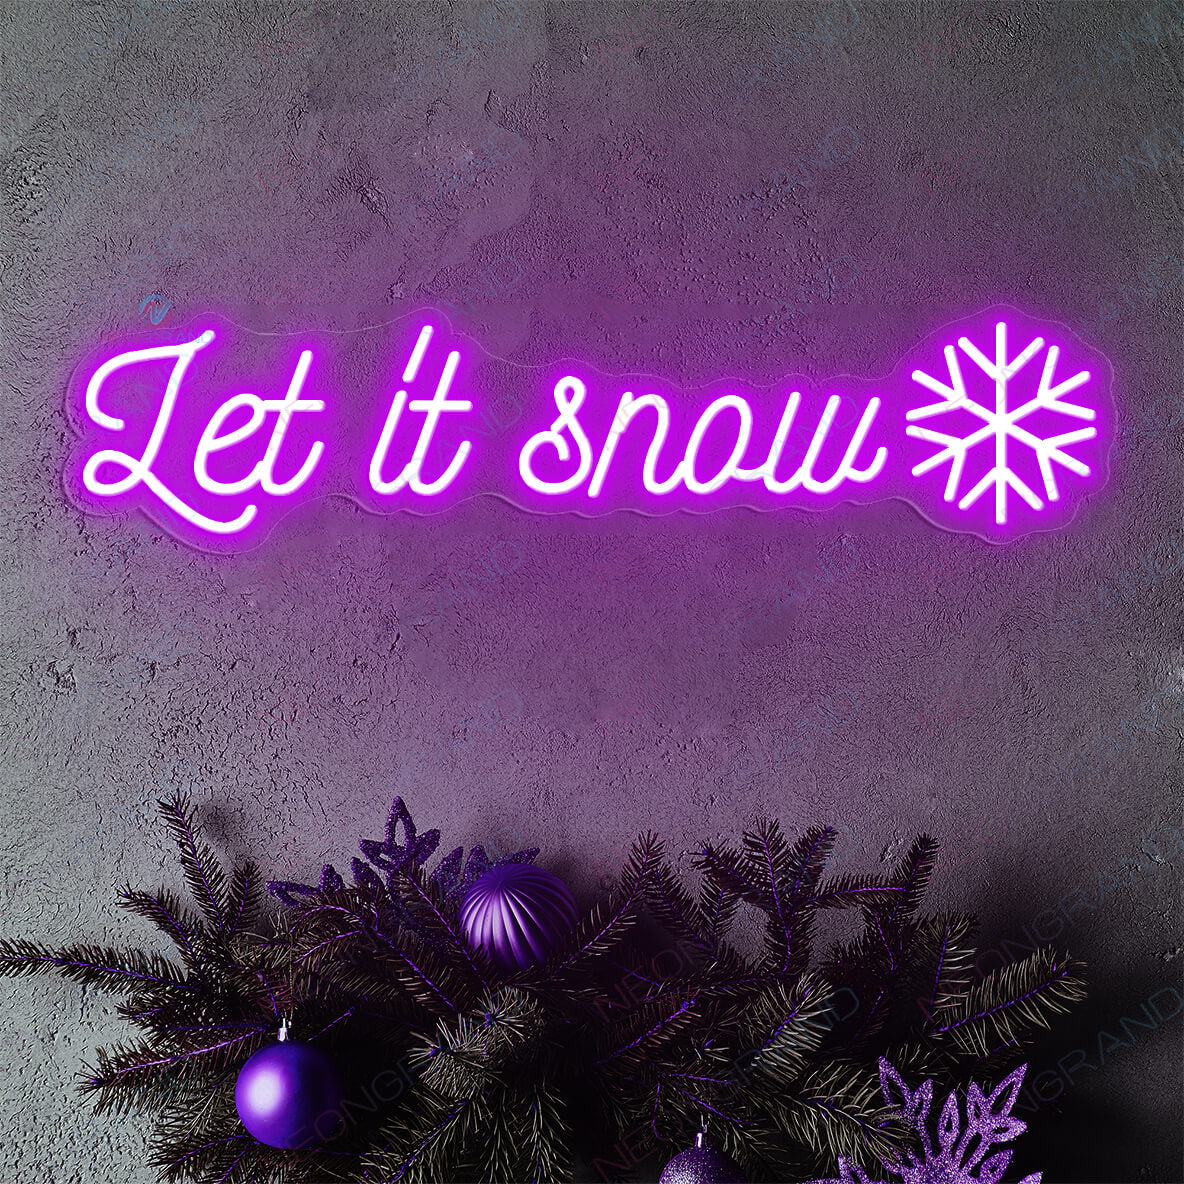 Christmas Neon Sign Let It Snow Xmas Led Light DarkViolet